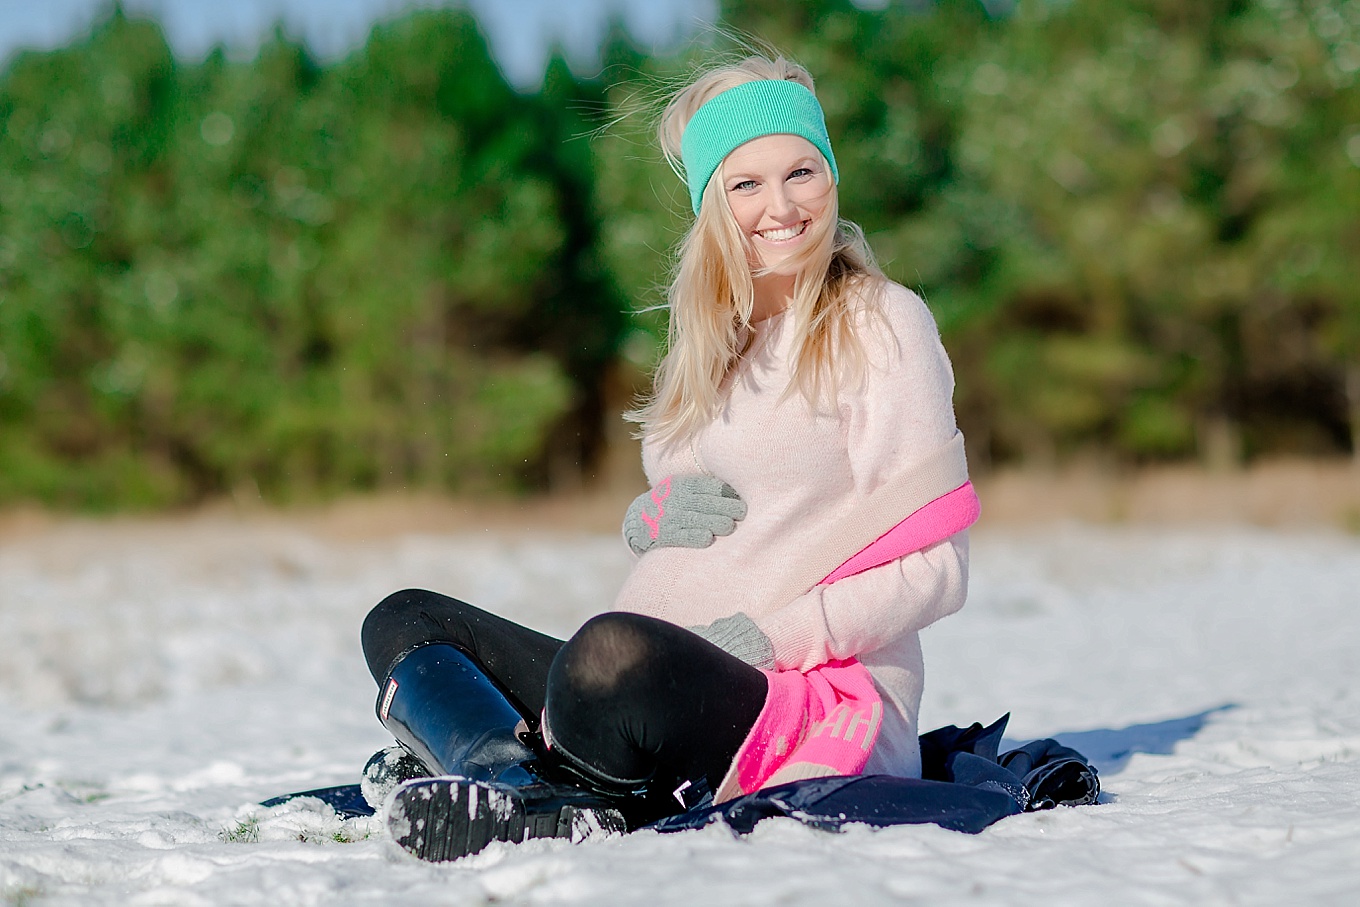 Beautiful Virginia Beach Snowy Maternity Session by Brooke Tucker Photography